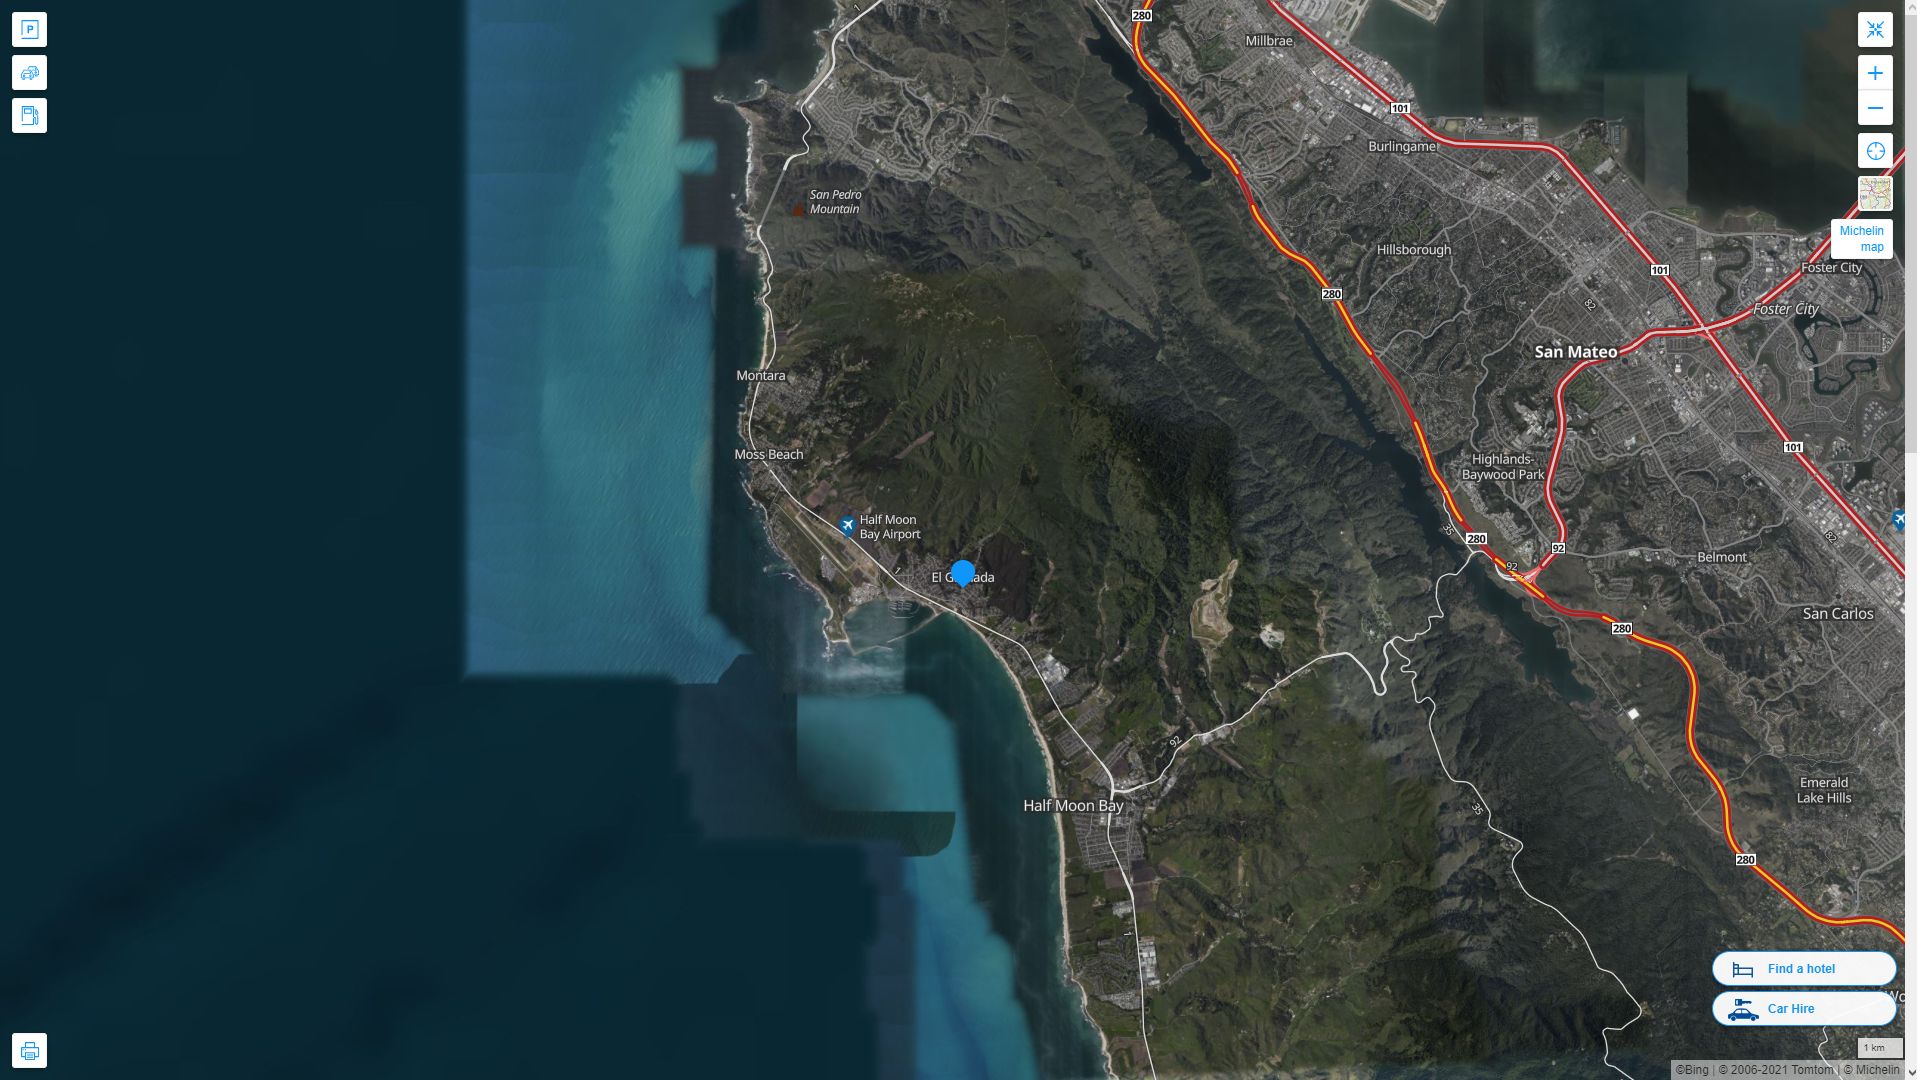 El Granada California Highway and Road Map with Satellite View